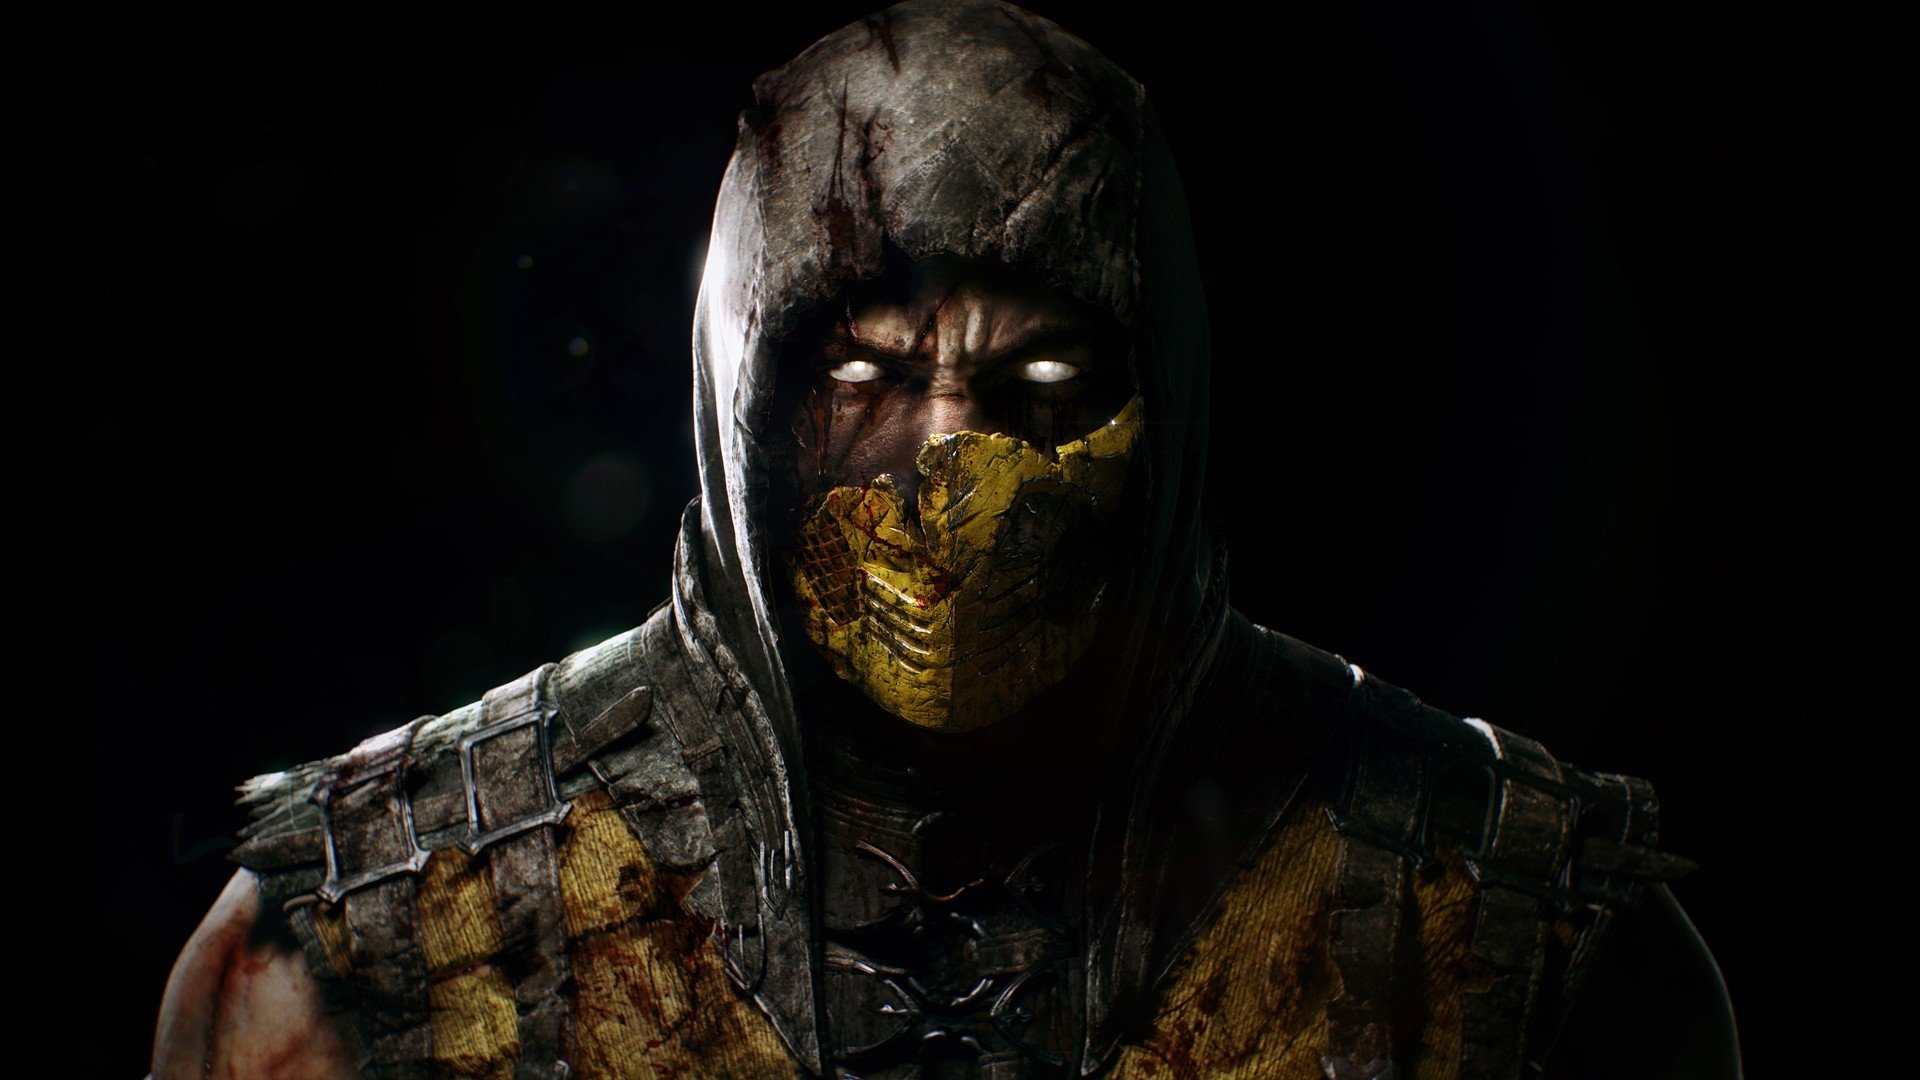 Mortal Kombat X HD Wallpaper Background Image